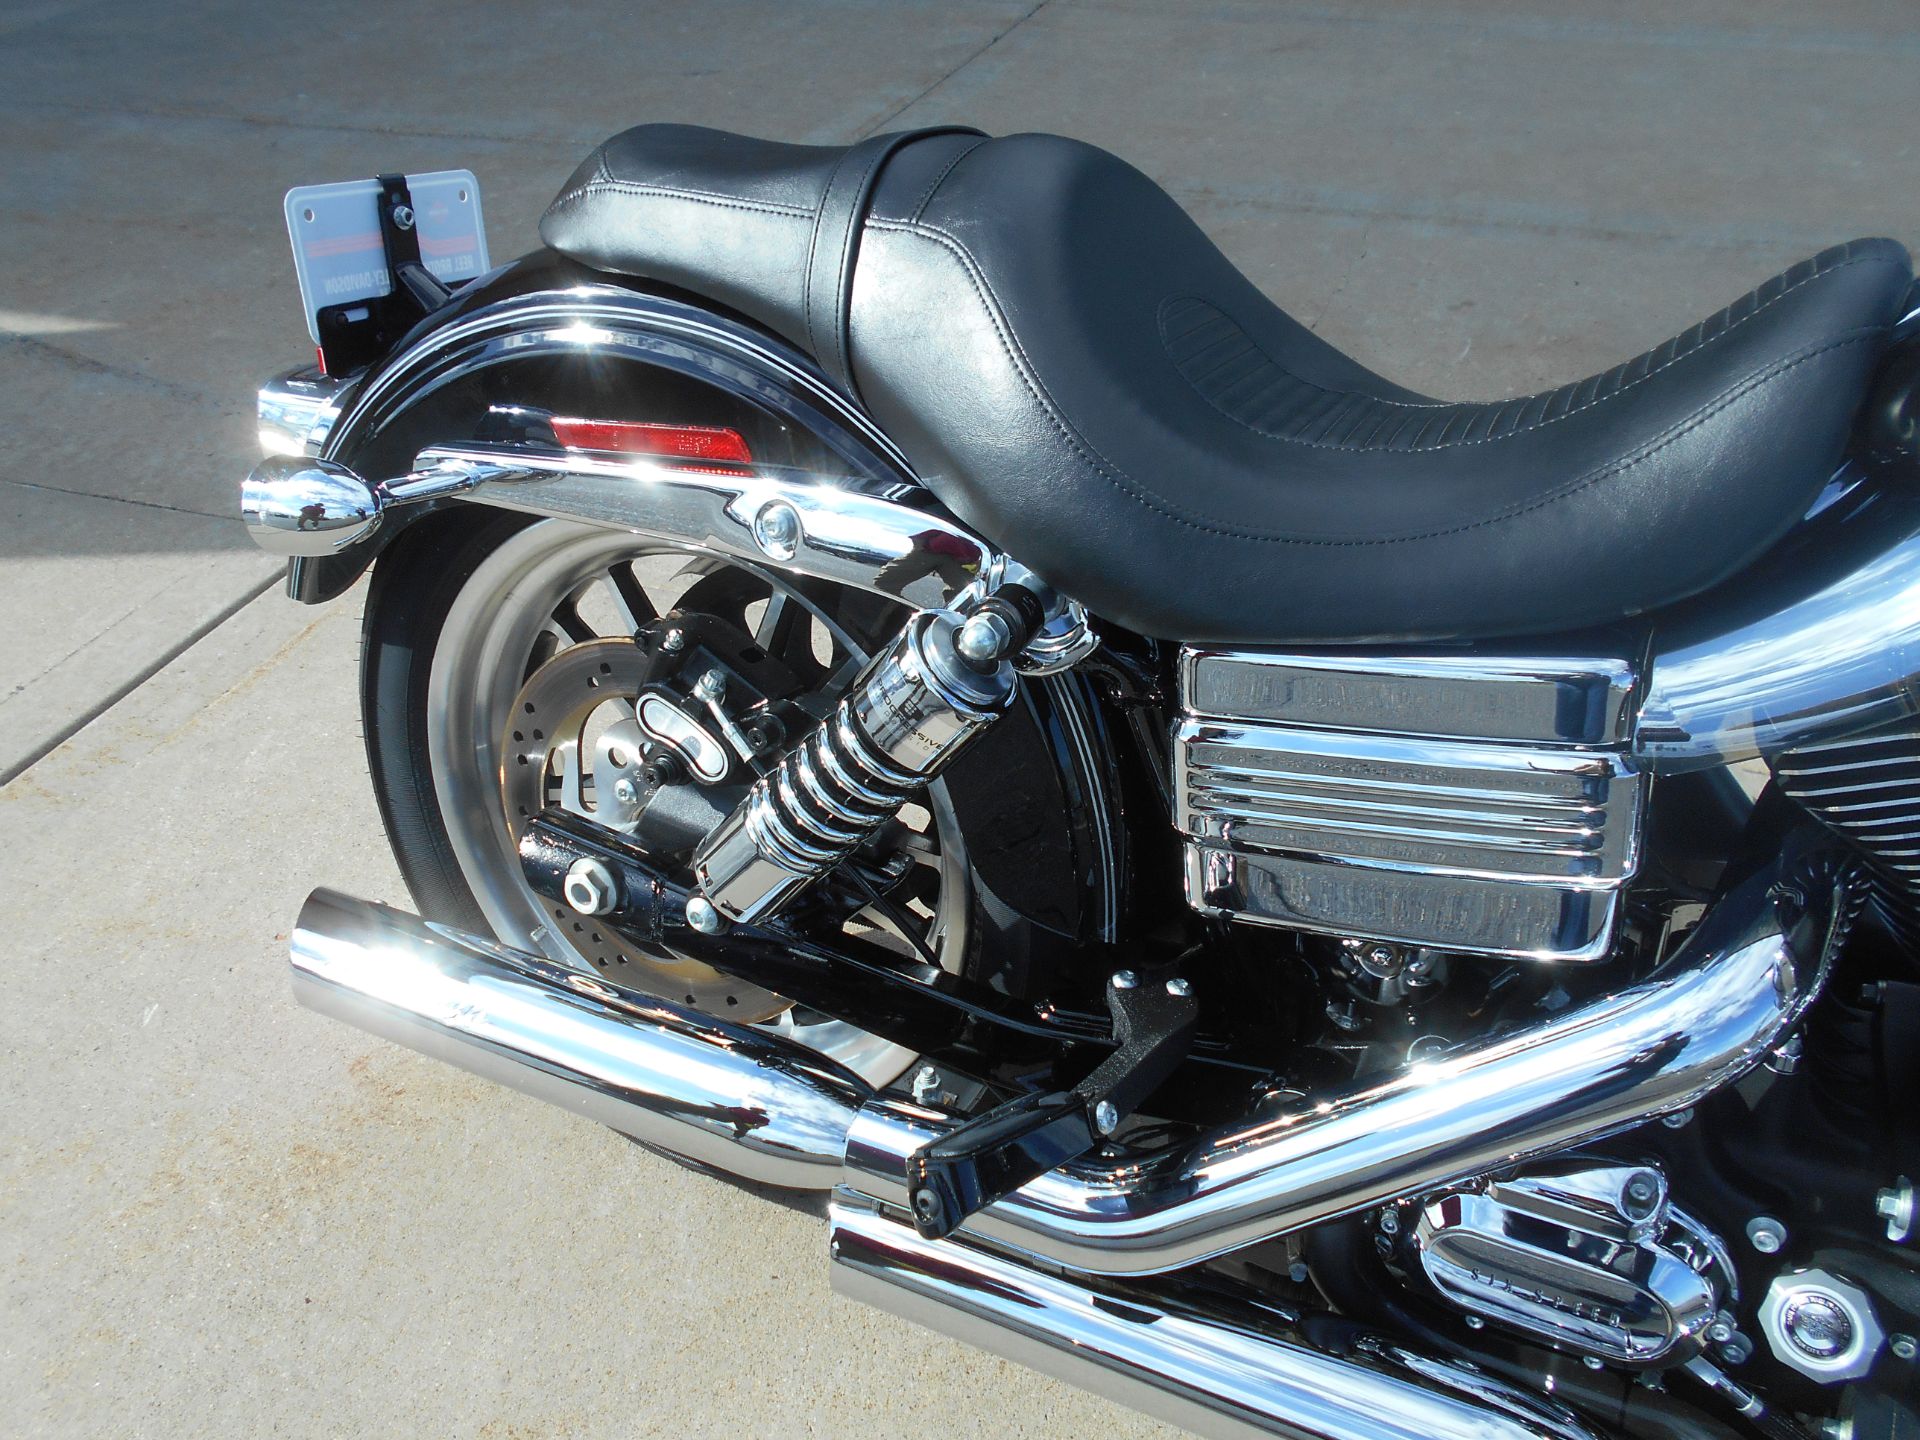 2009 Harley-Davidson Dyna® Low Rider® in Mauston, Wisconsin - Photo 6